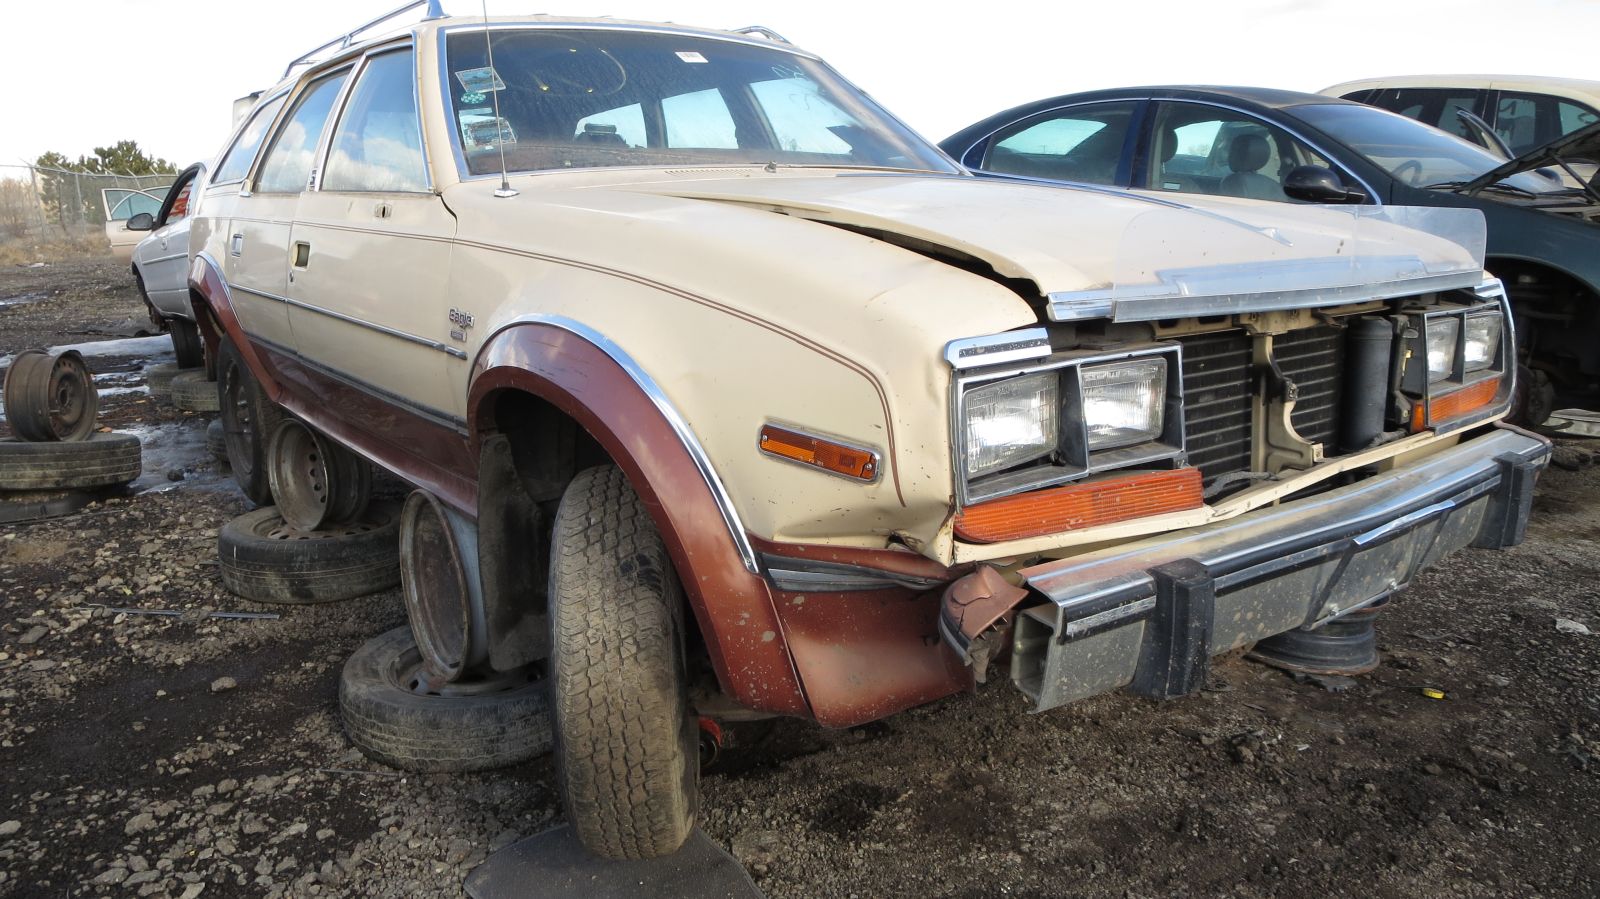 18 - 1982 AMC Eagle wagon in Colorado junkyard - photo by Murilee Martin